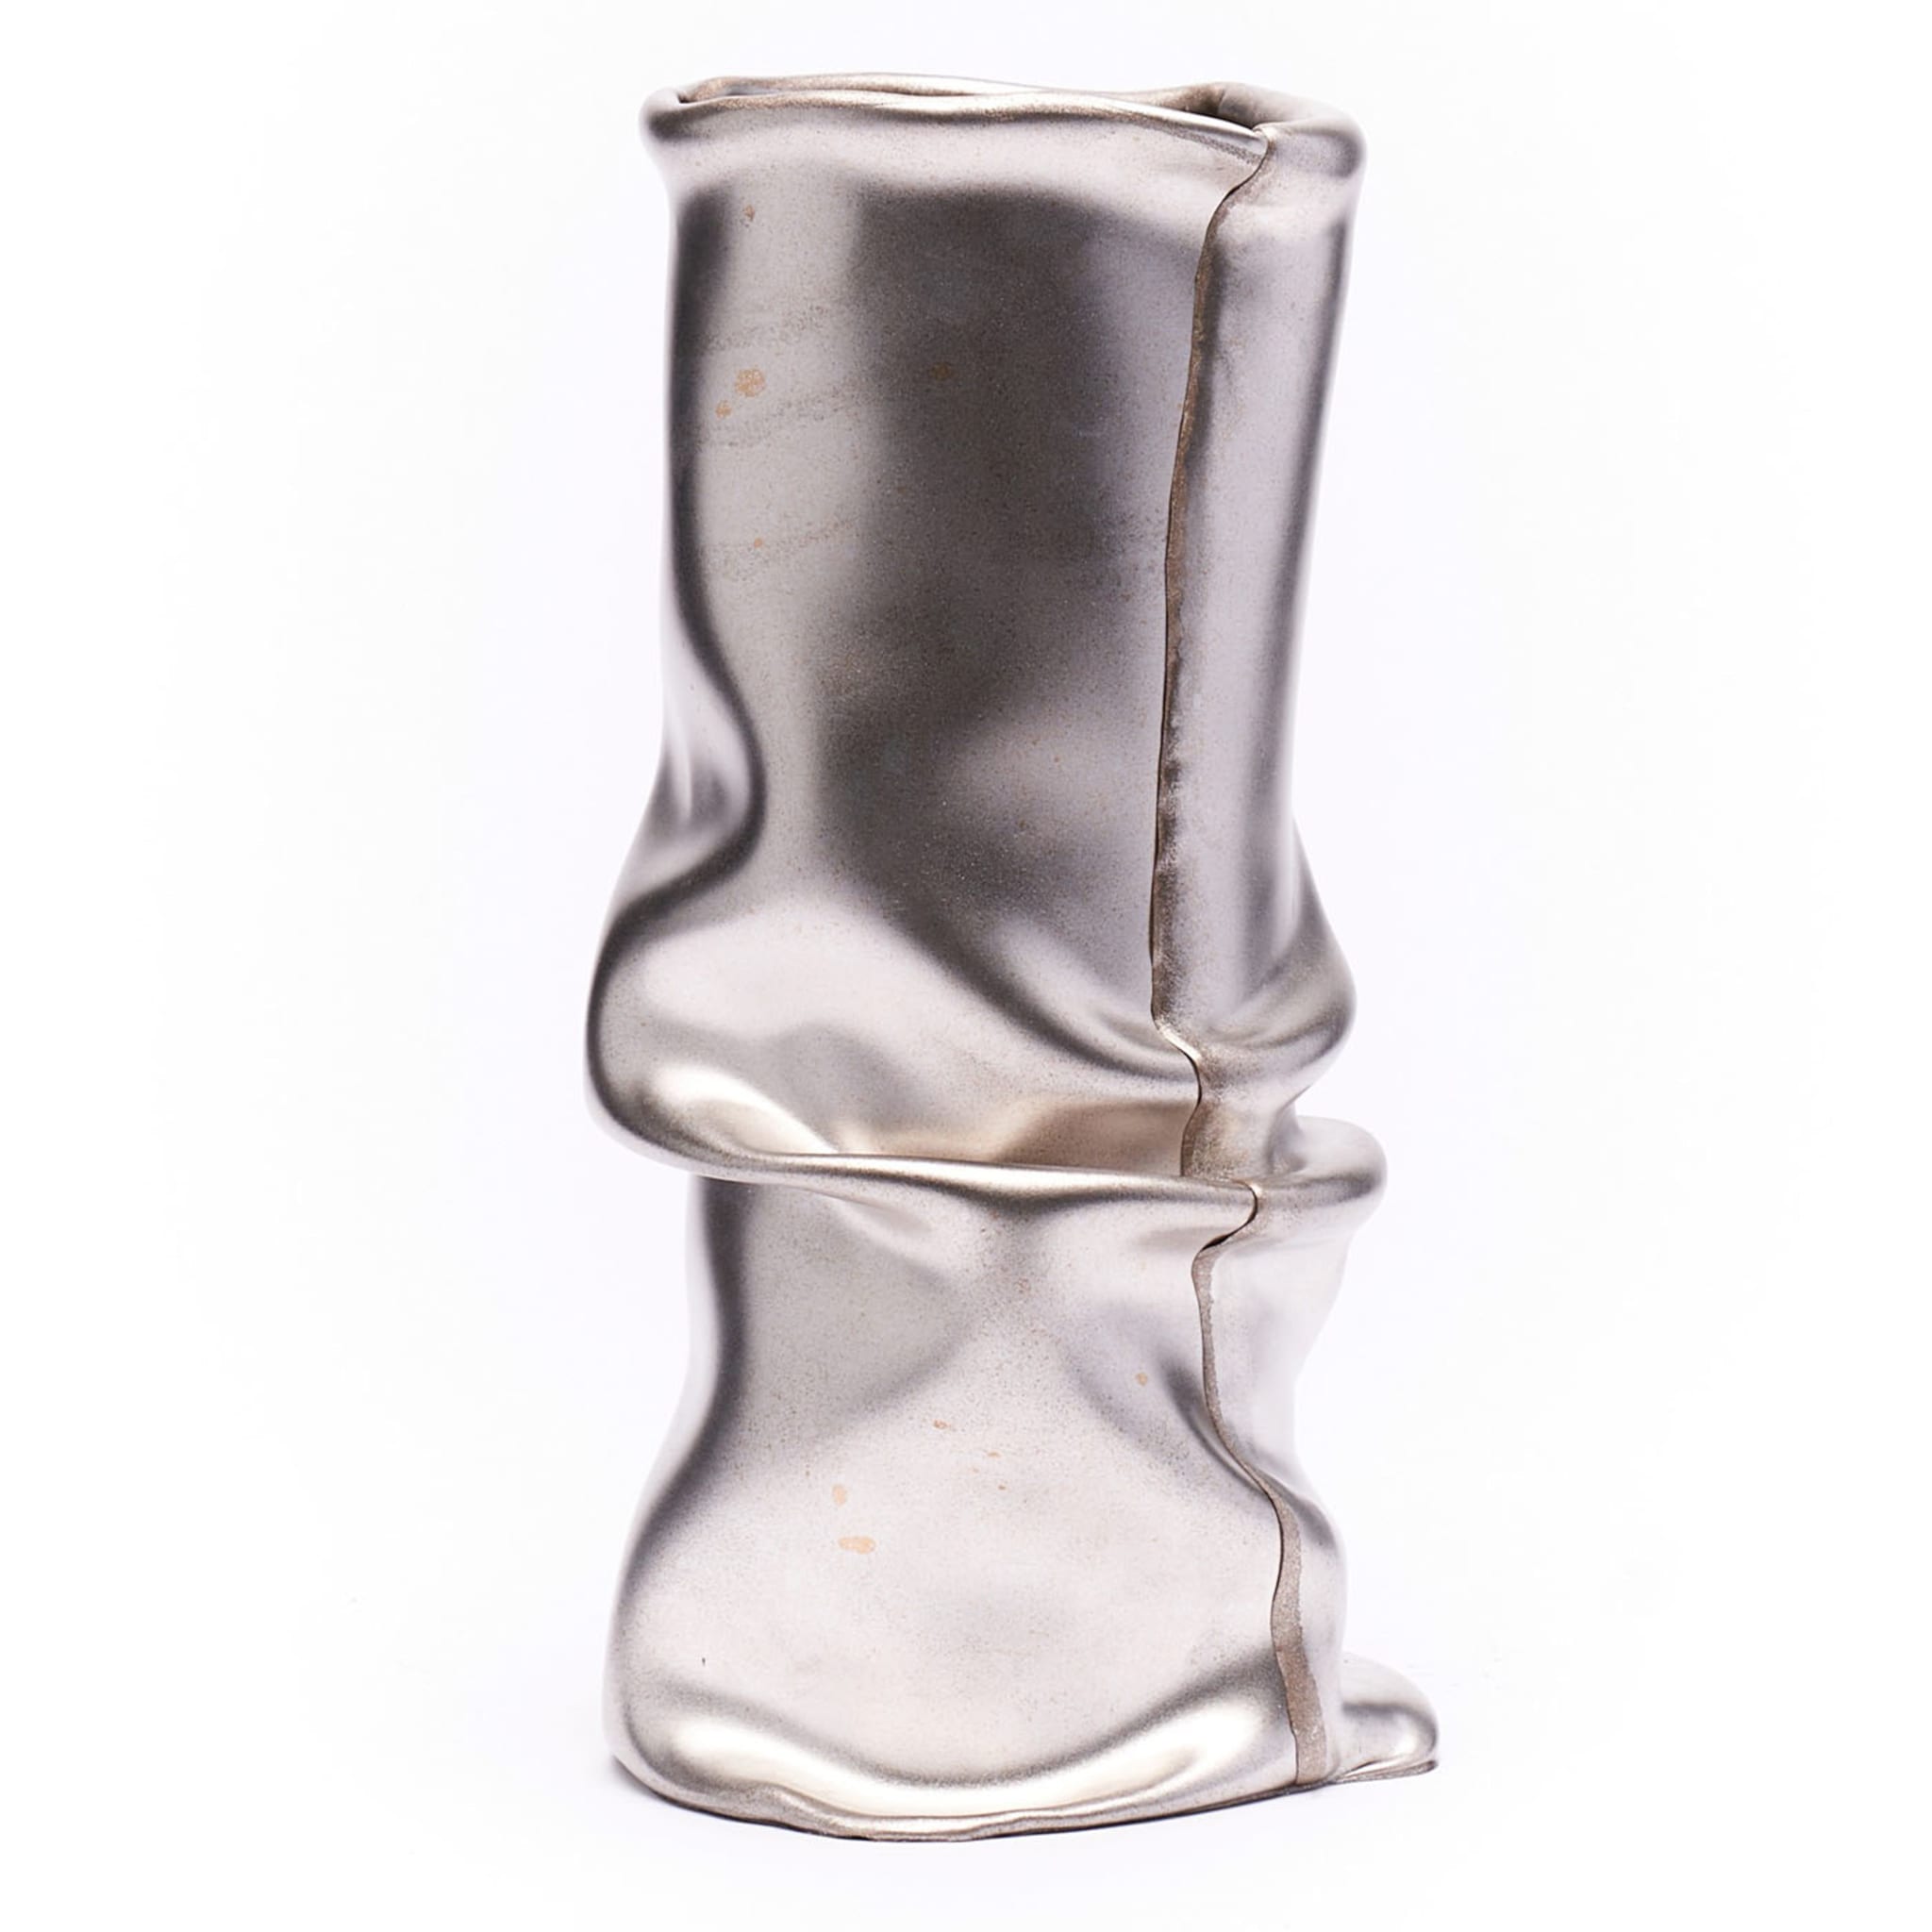 Venere Small Pleated Silvery Vase - Alternative view 1